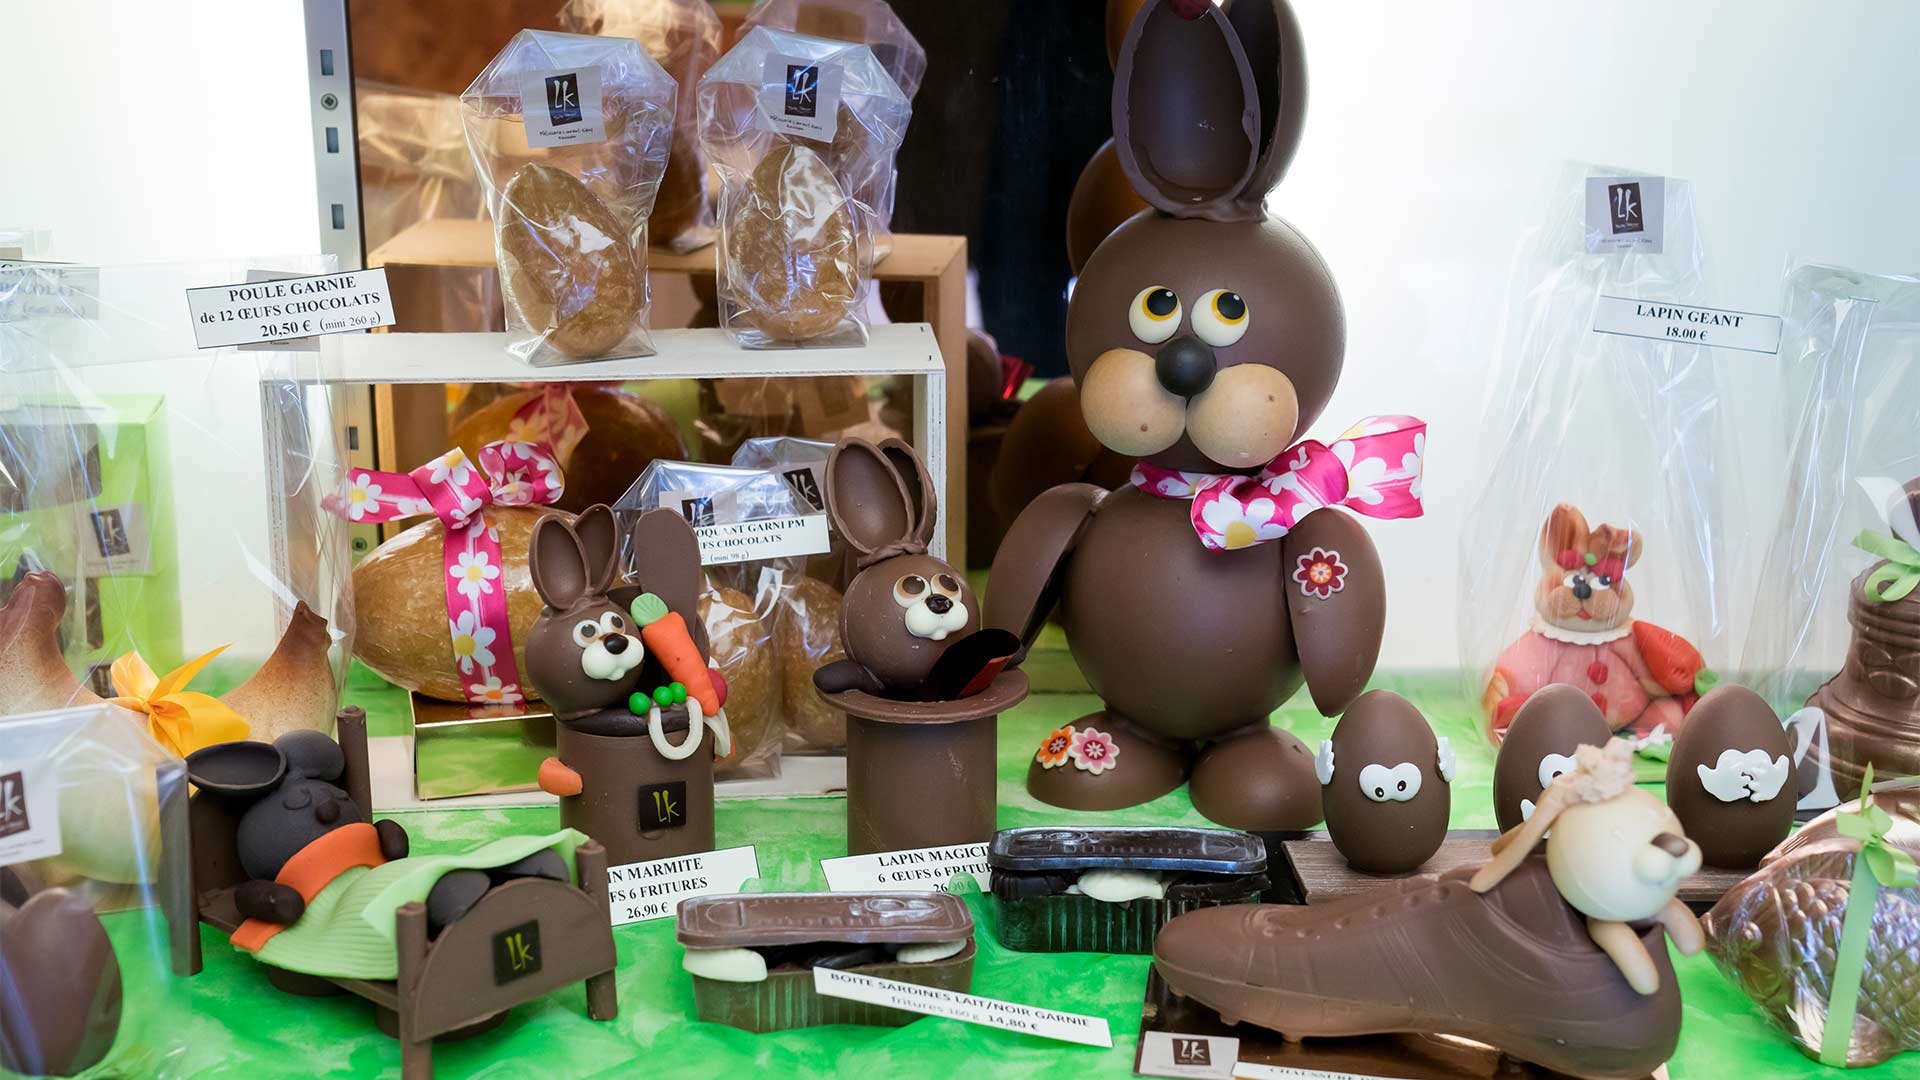 Chocolats de Pâques - Pâtisserie chocolaterie "Kieny Laurent" à Riedisheim